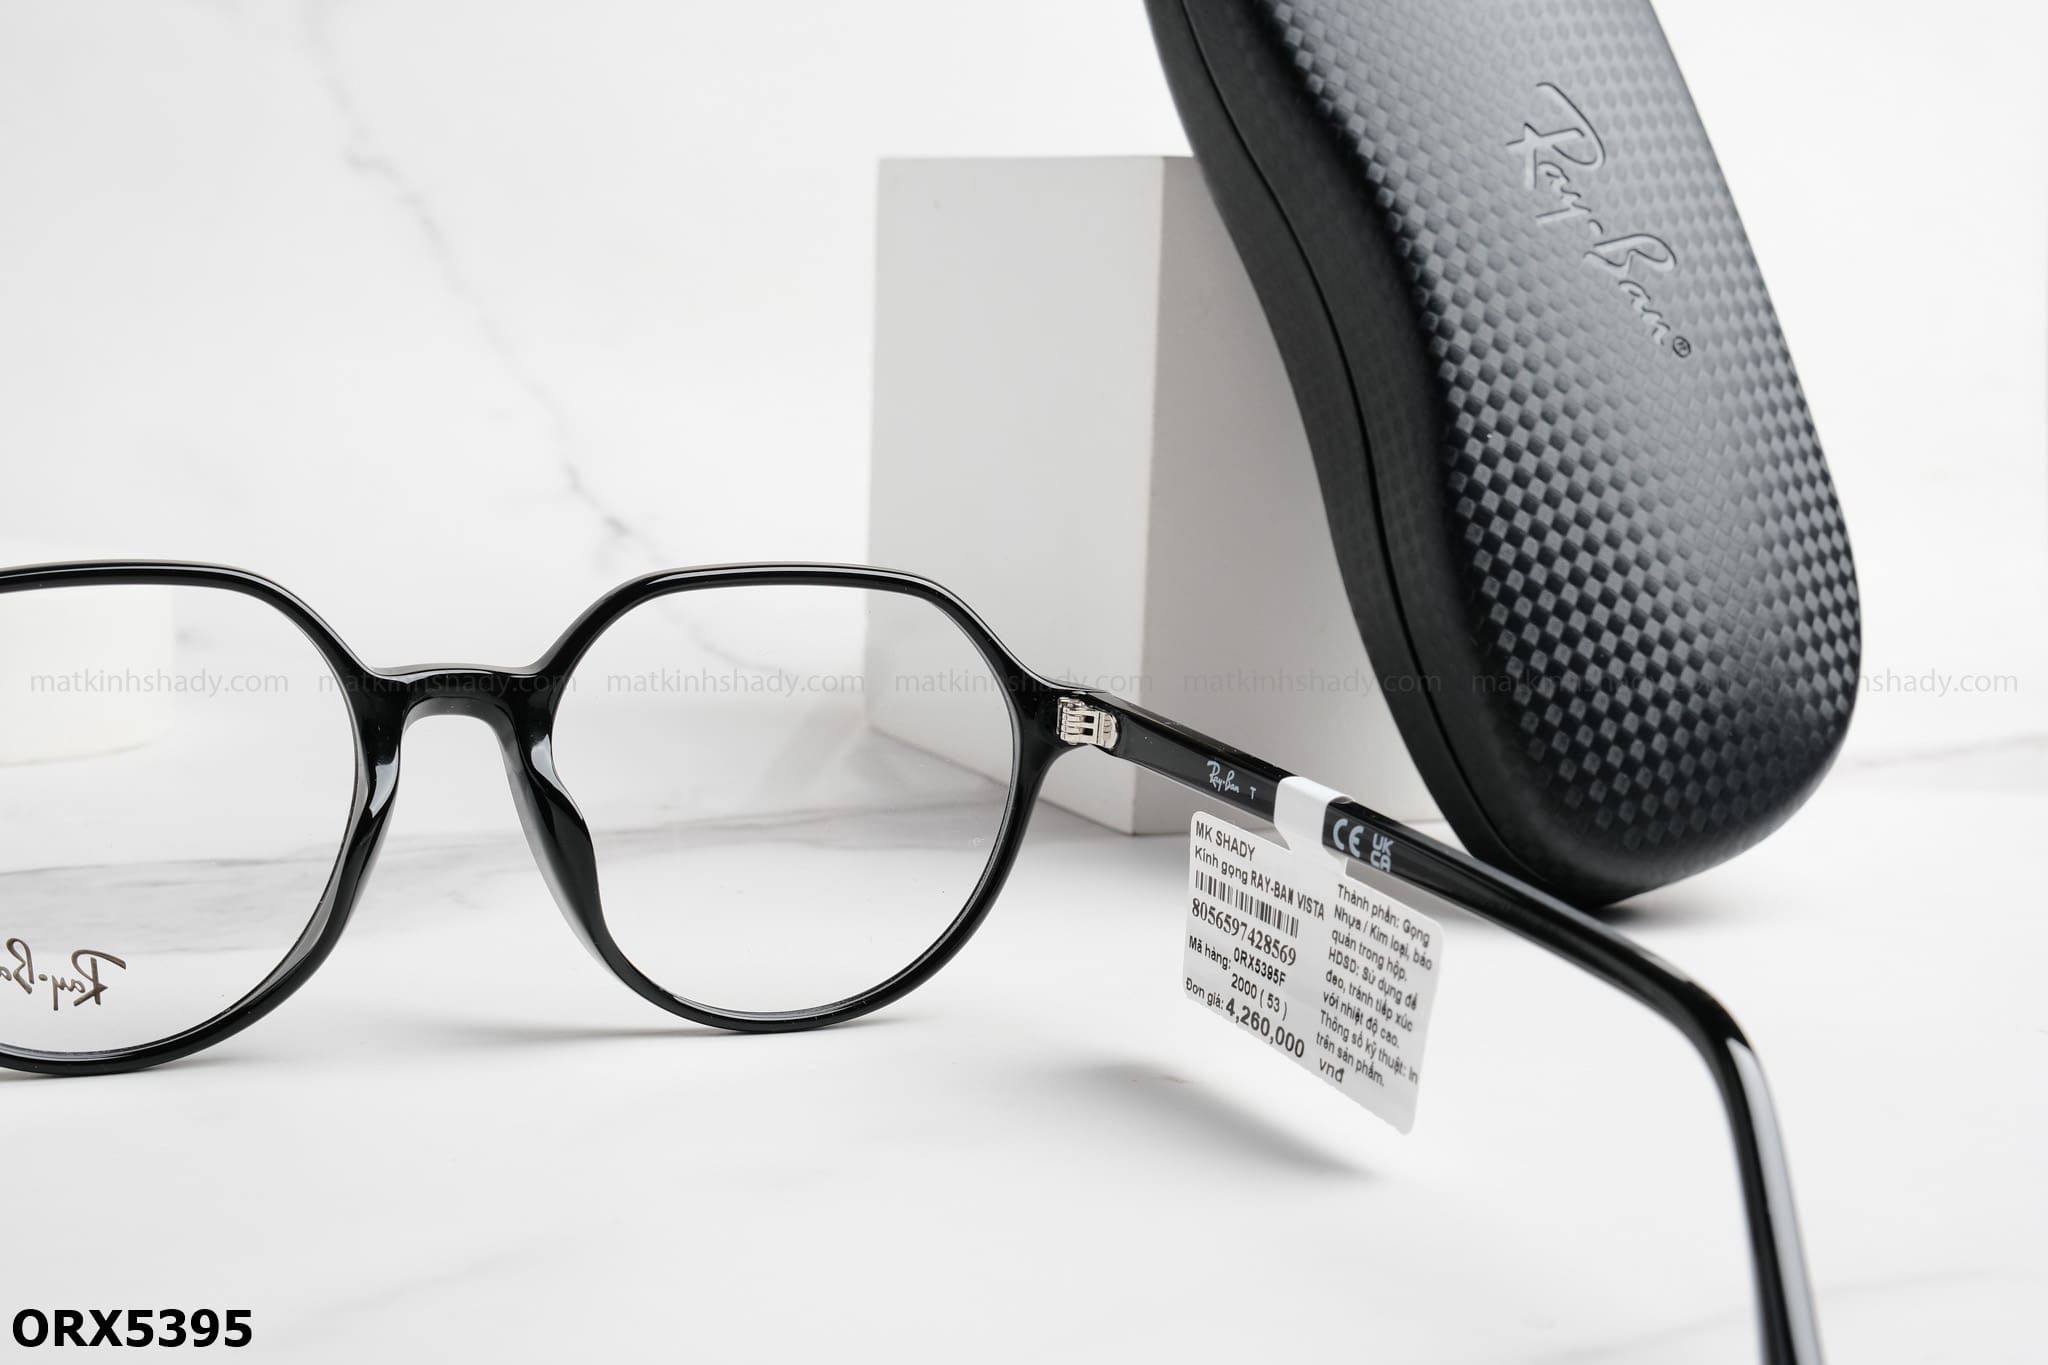  Rayban Eyewear - Glasses - ORX5395 